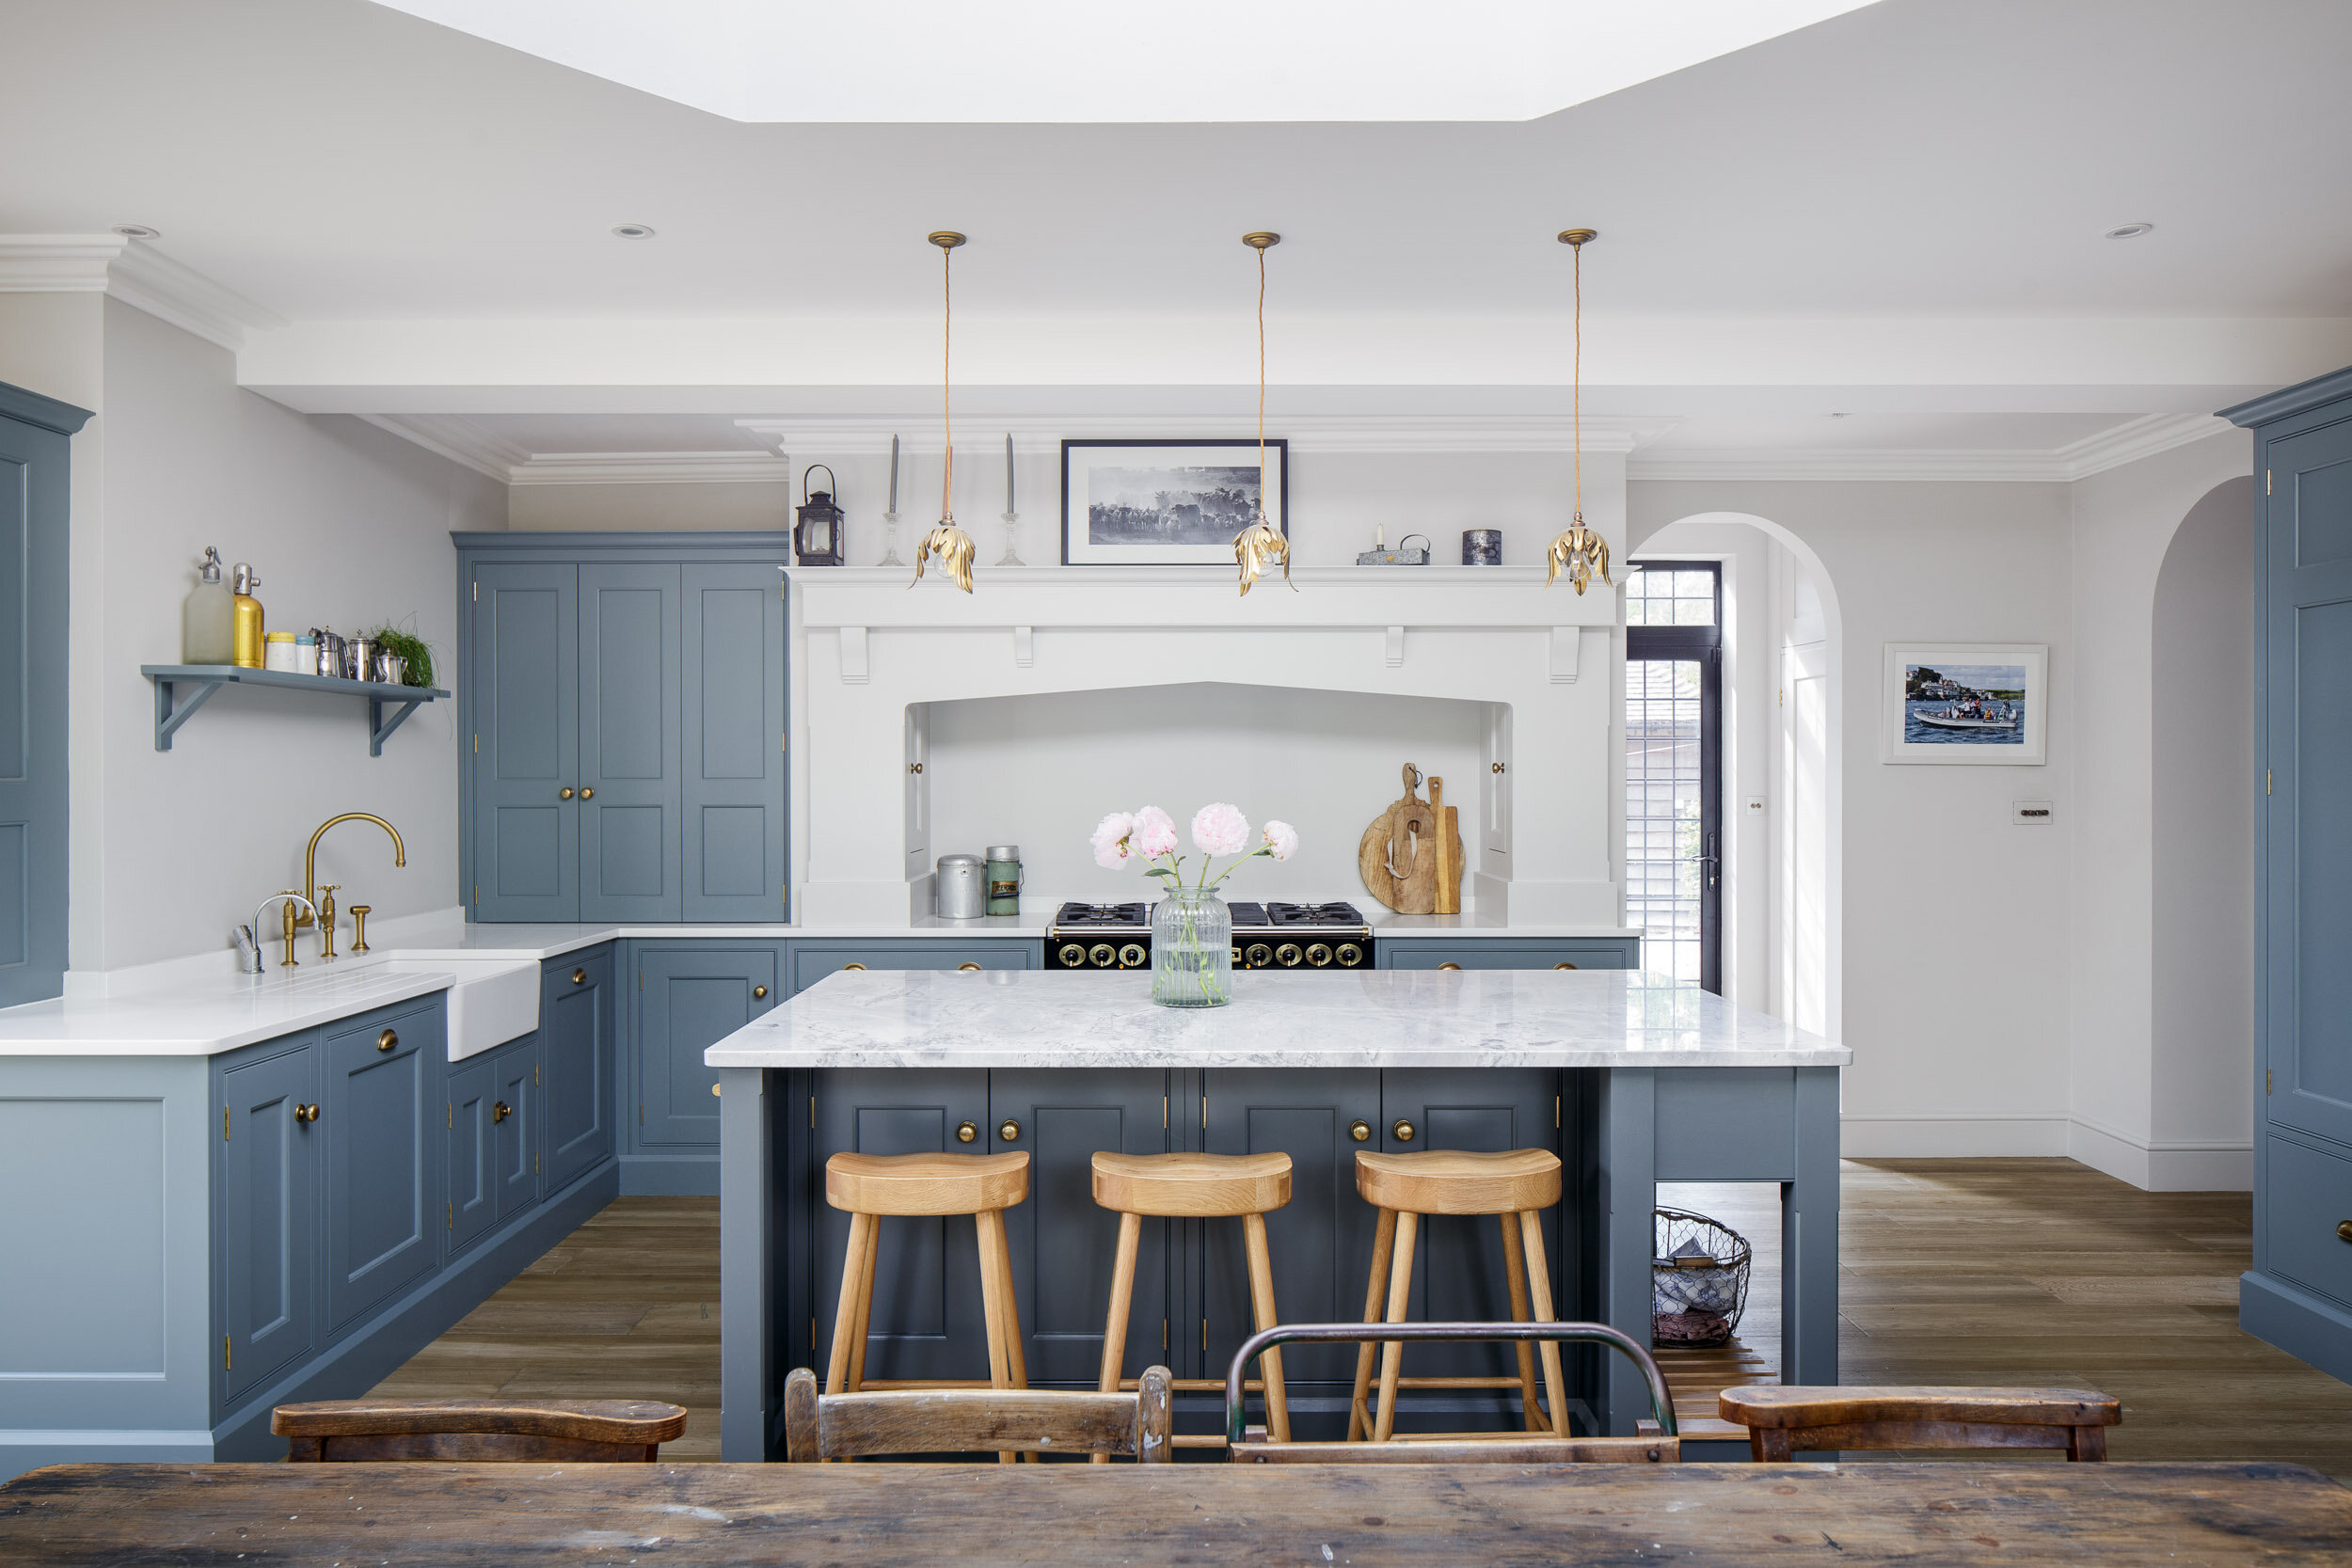 residential blue kitchen interior london photograph.jpg